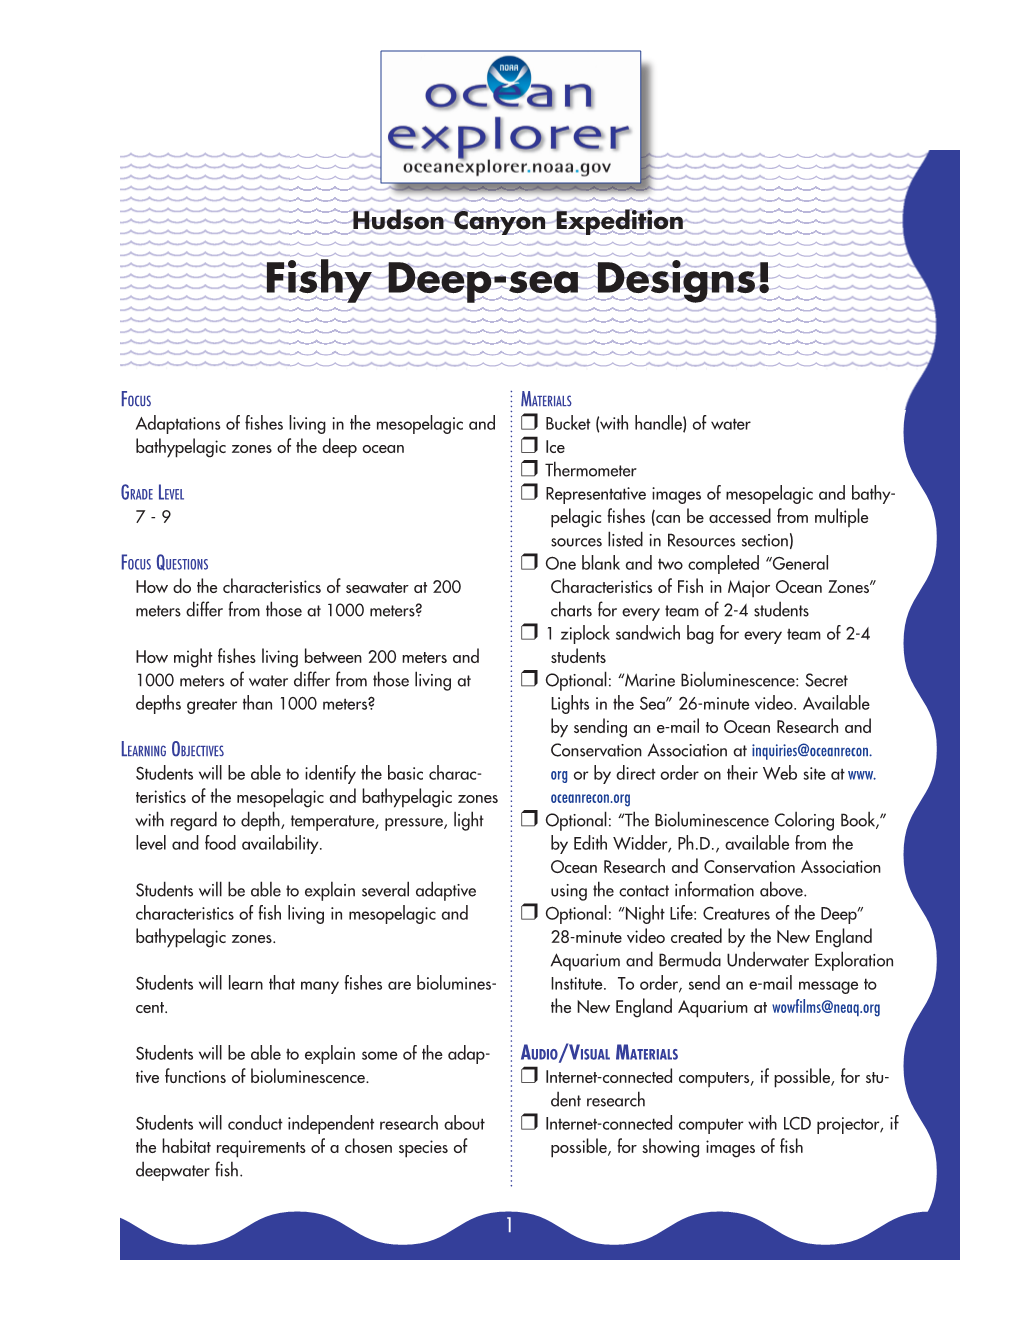 Fishy Deep-Sea Designs!